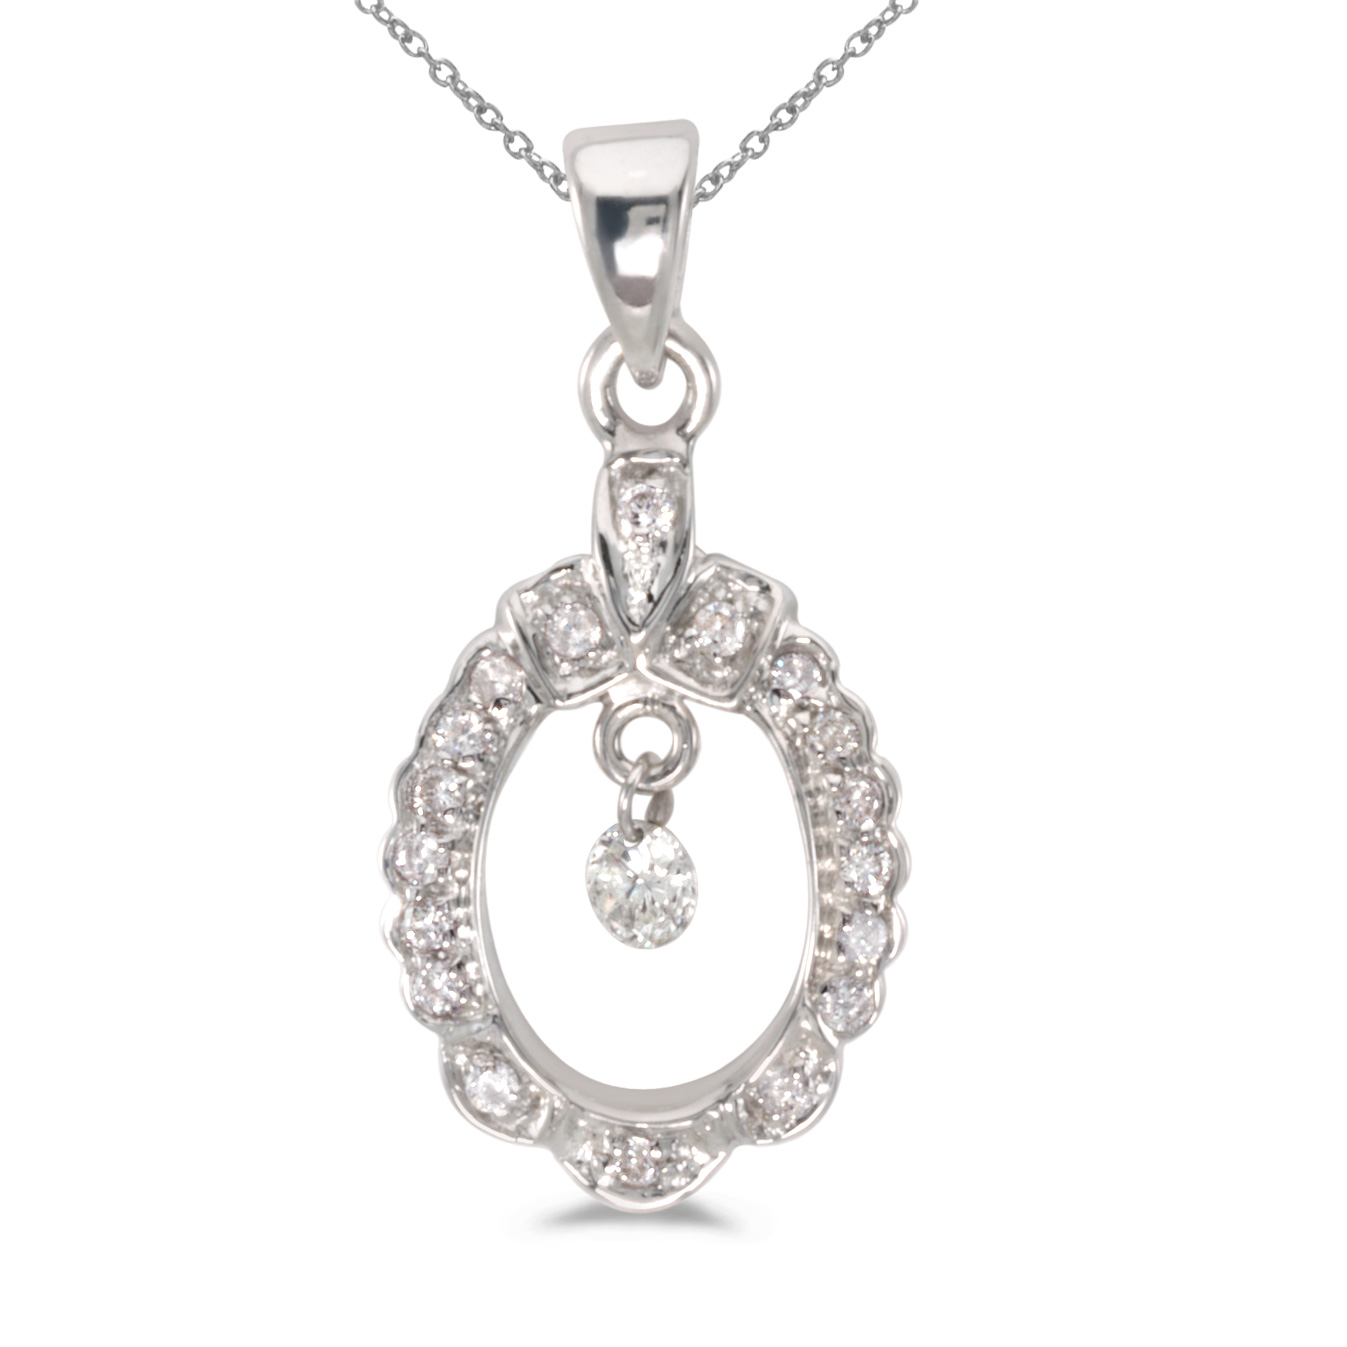 14k gold Dashinng Diamonds pendant with 0.20 total ct diamonds. The center dangling diamond dance...